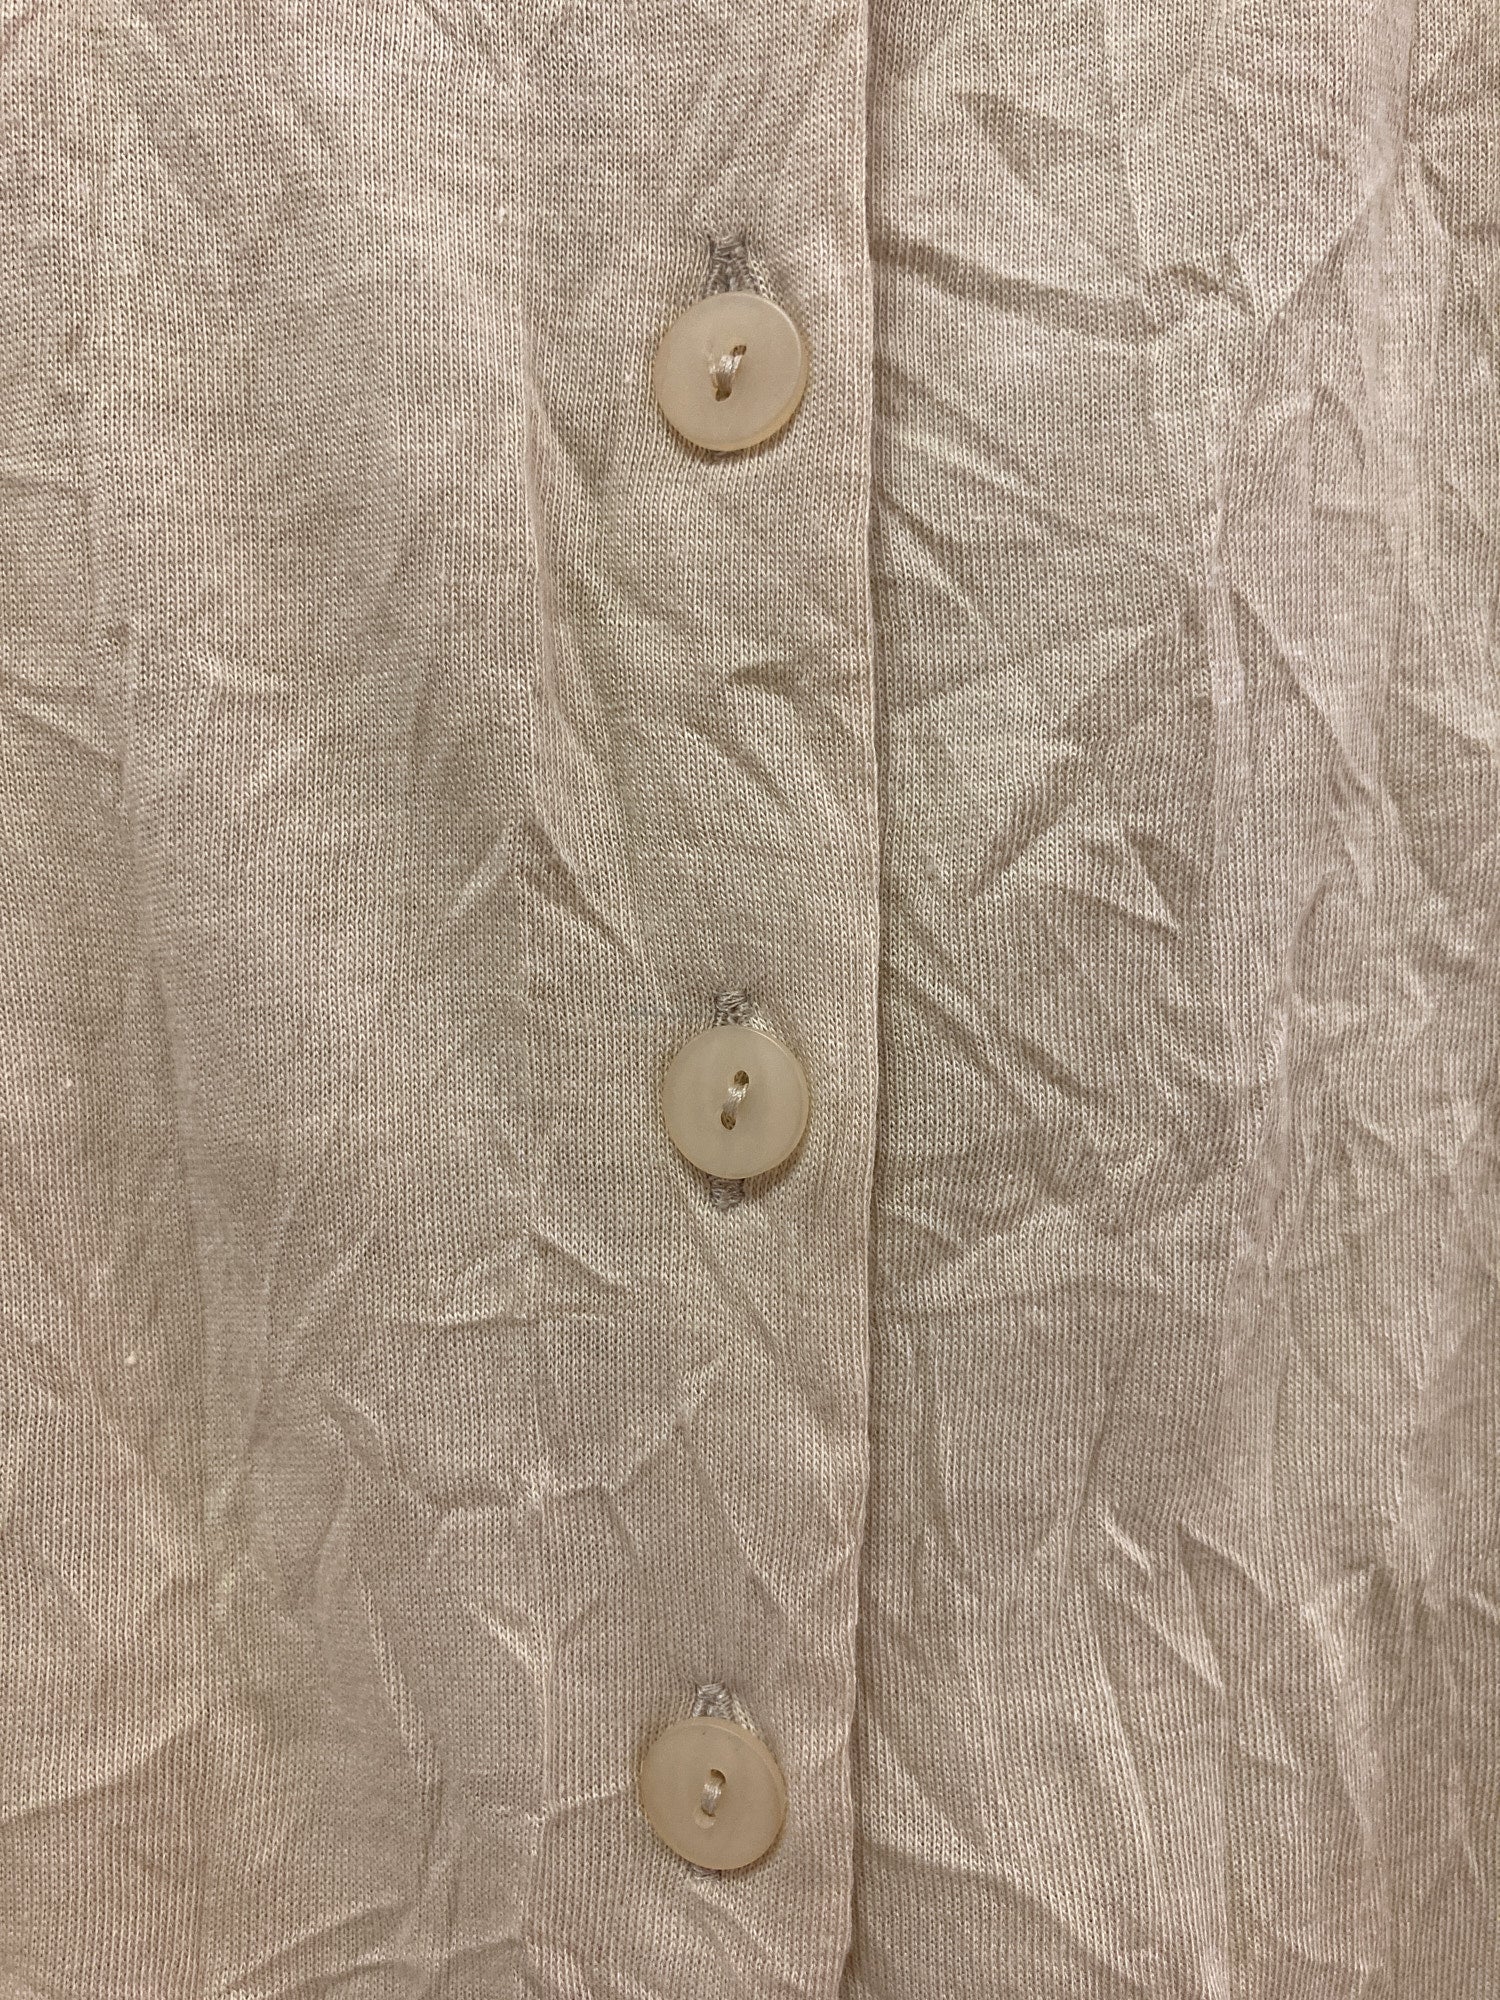 Krizia Poi wrinkled beige poly cotton cardigan and sleeveless dress set - 42 40